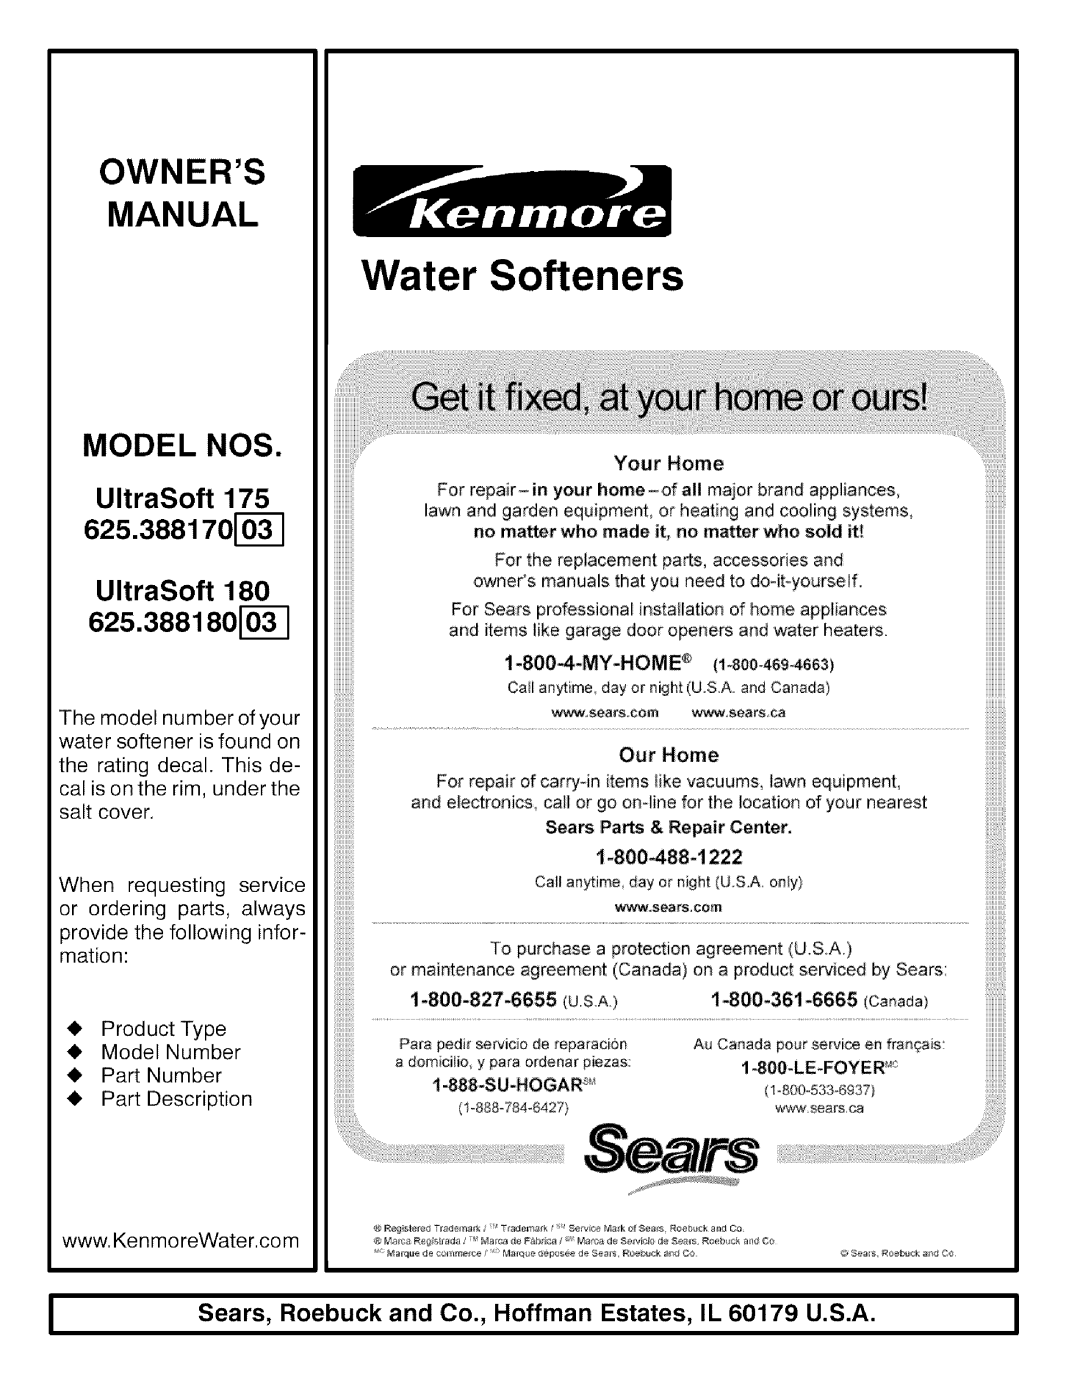 Kenmore Water Softeners, Owners Manual, UltraSoft 175 625.388170 C0, 625.388180, TopurchaseoprotectionagreementUSA 